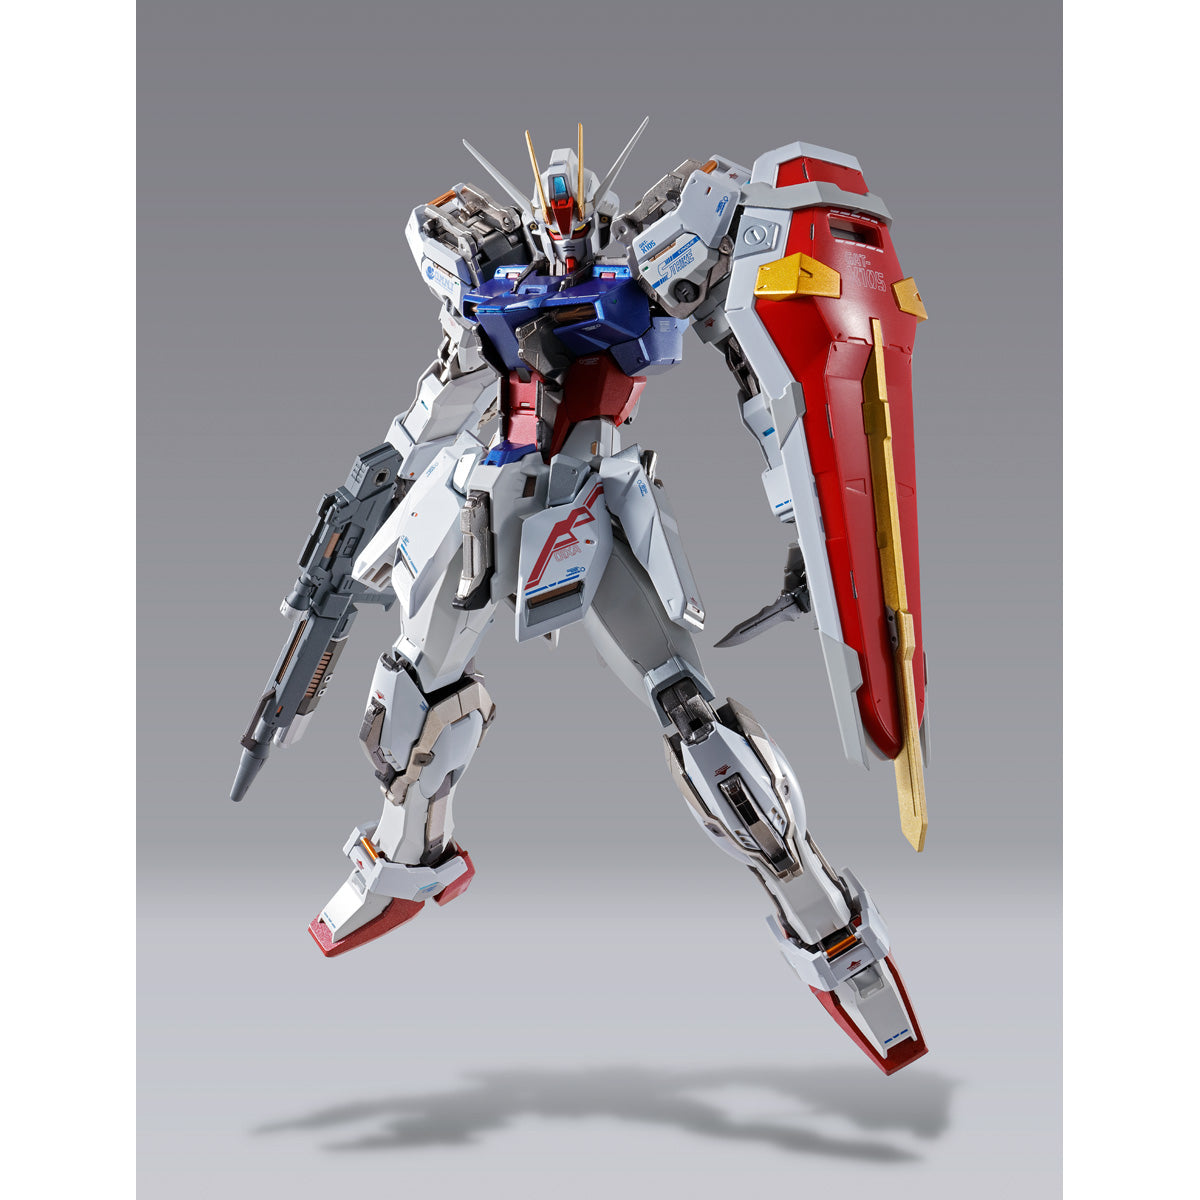 Metal Build Infinity GAT-X105 Strike Gundam Exclusive 10th Anniversary